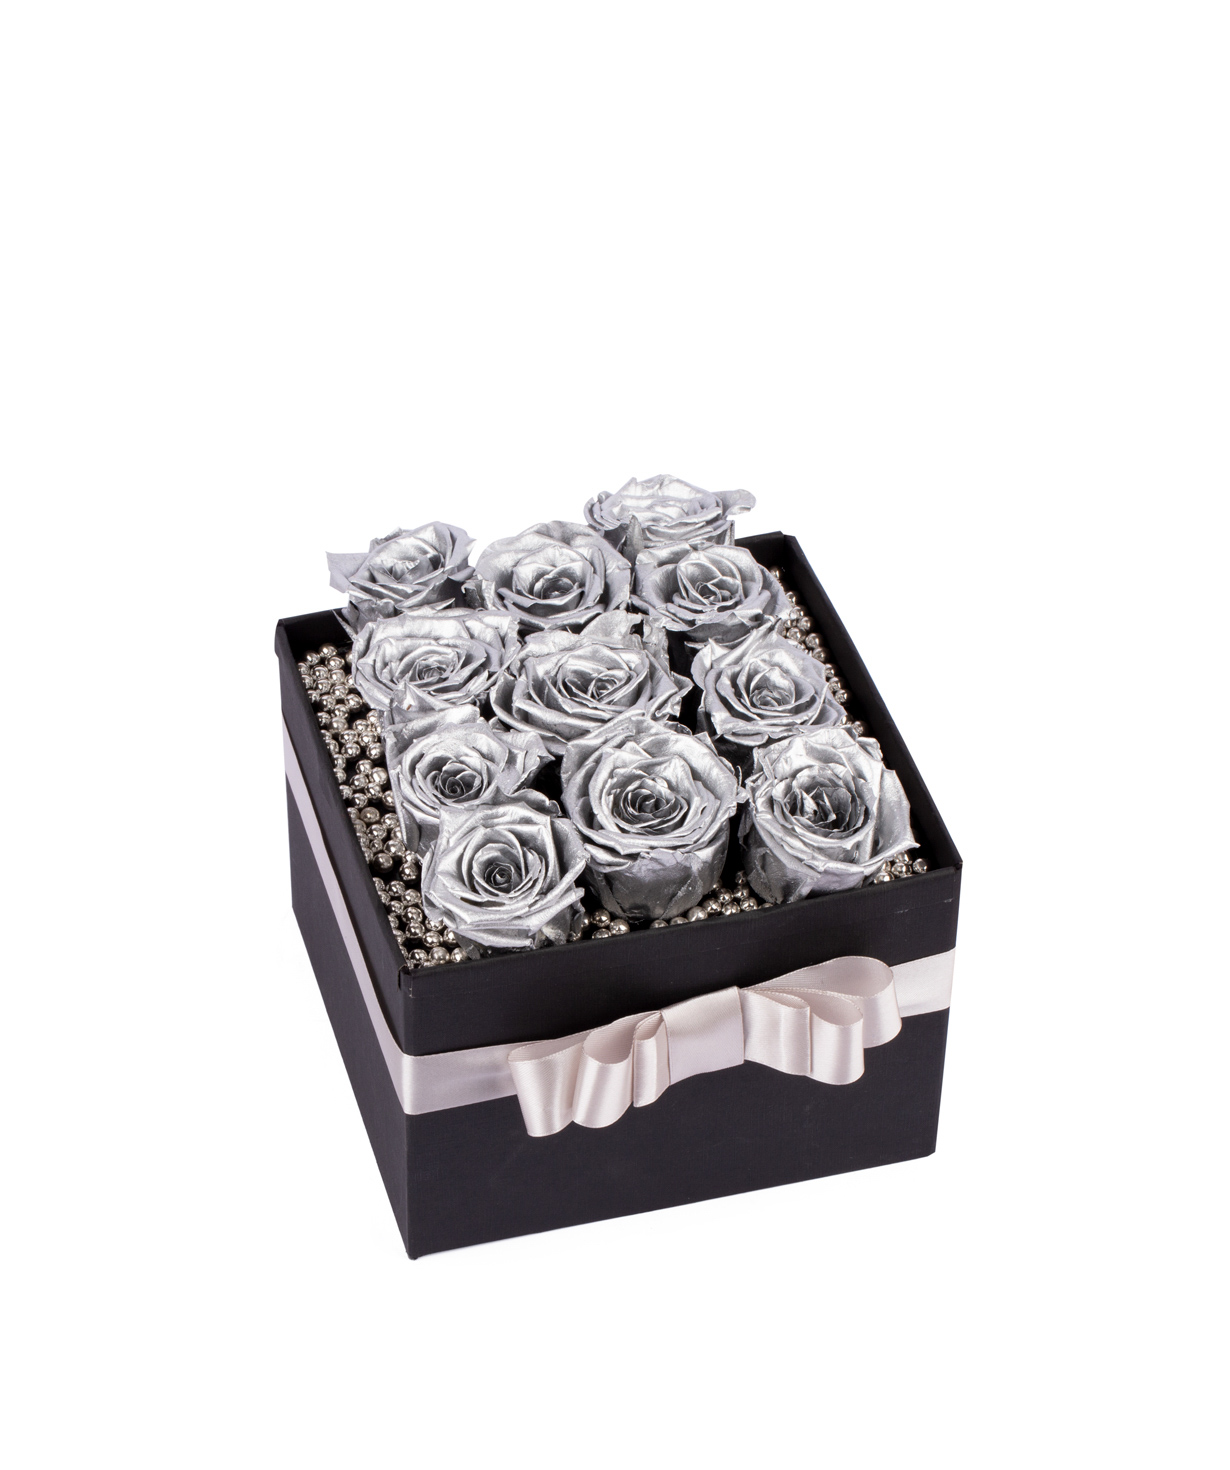 Arrangement `EM Flowers` with silver eternal roses